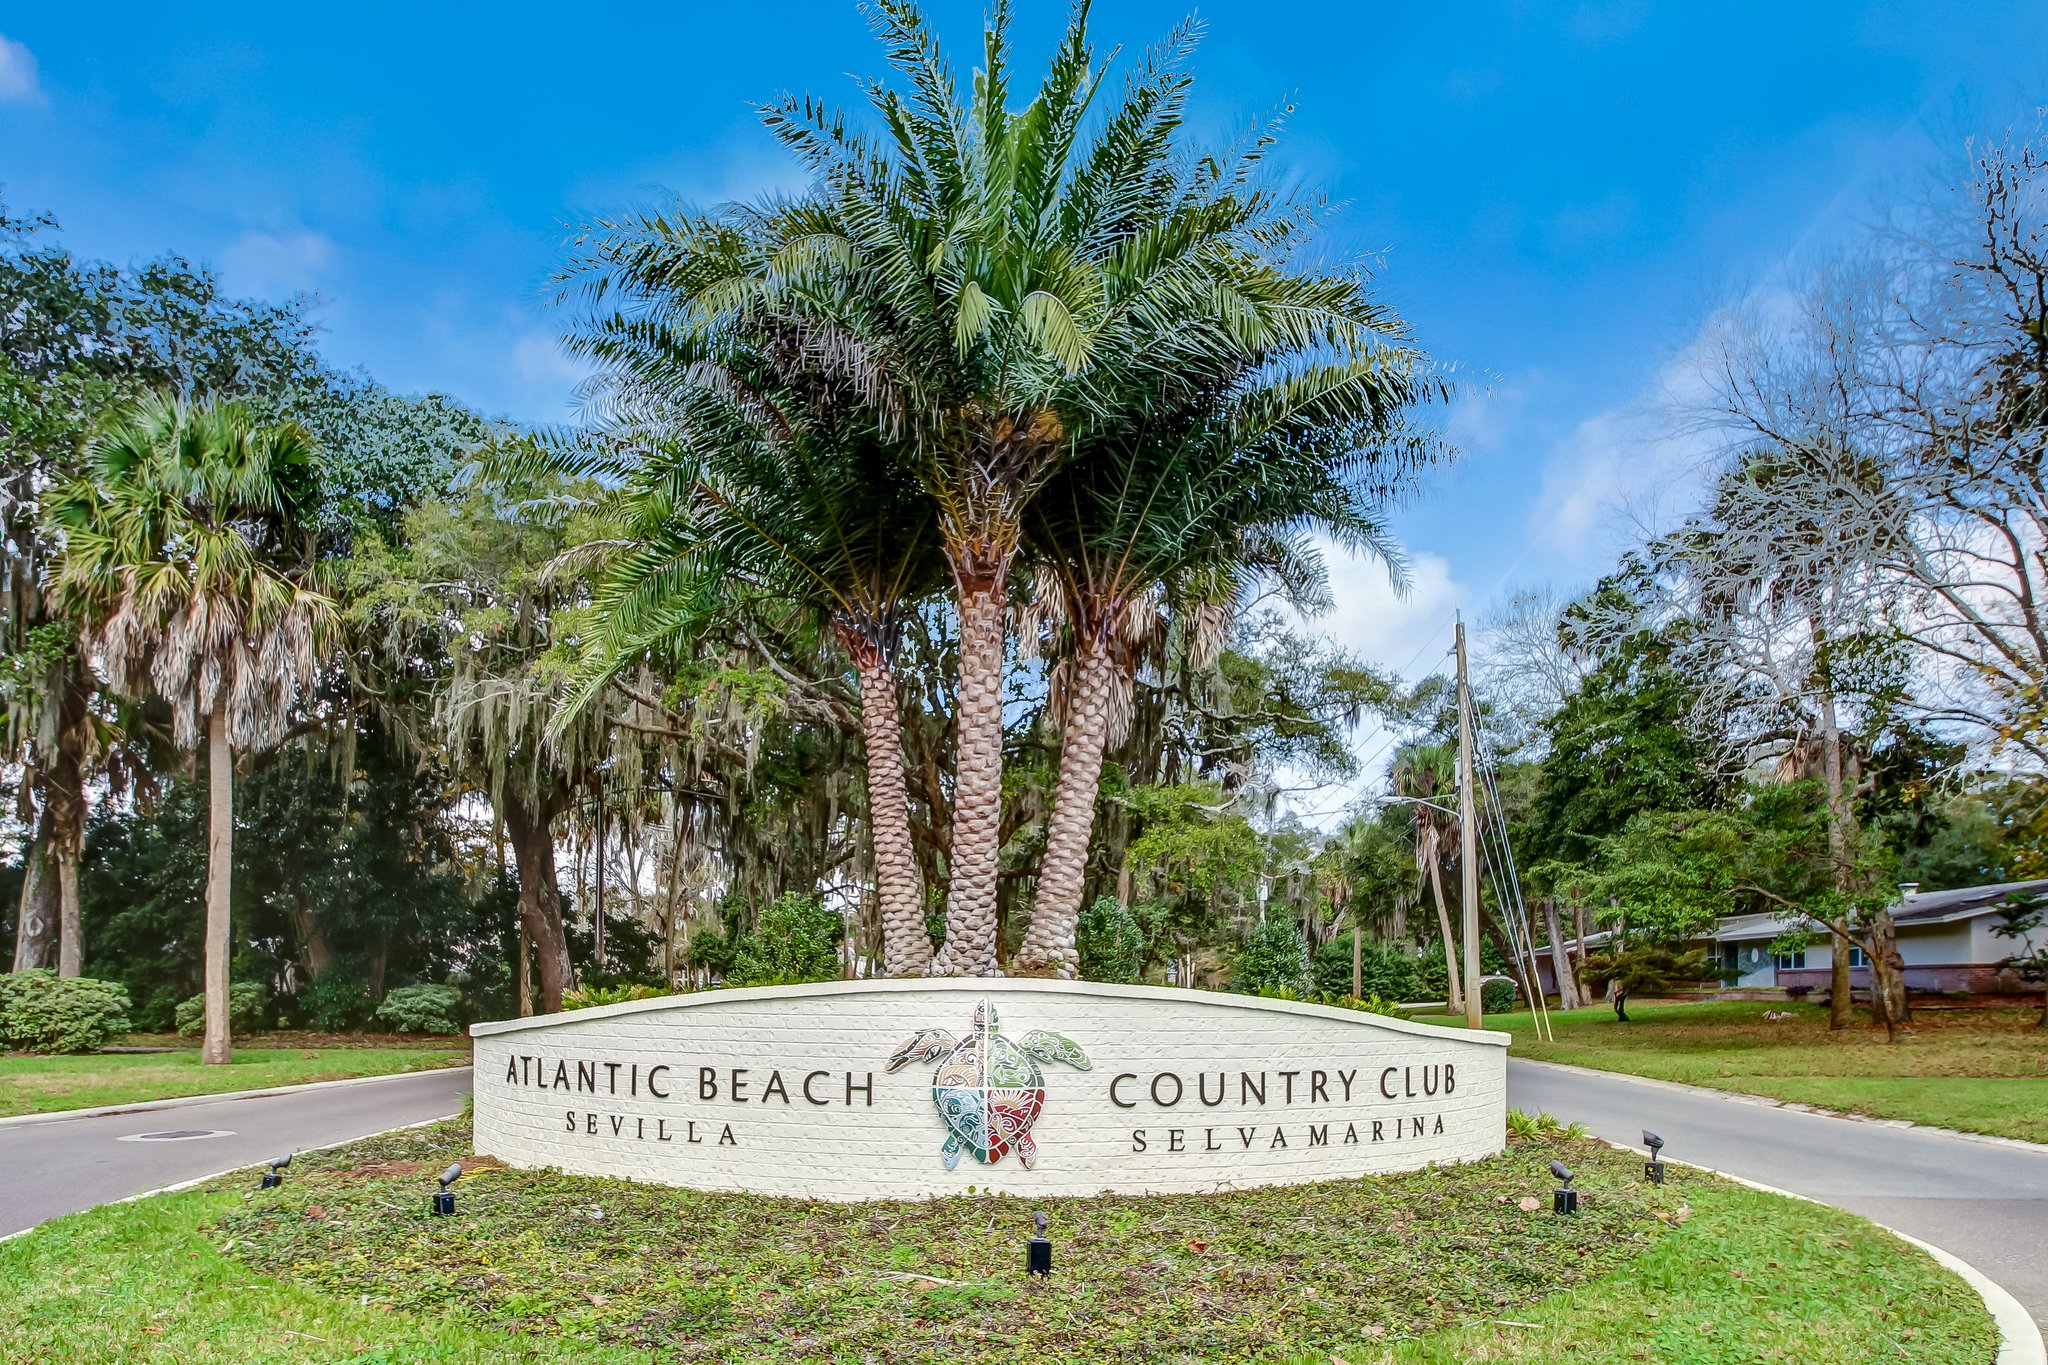 Atlantic Beach Country Club